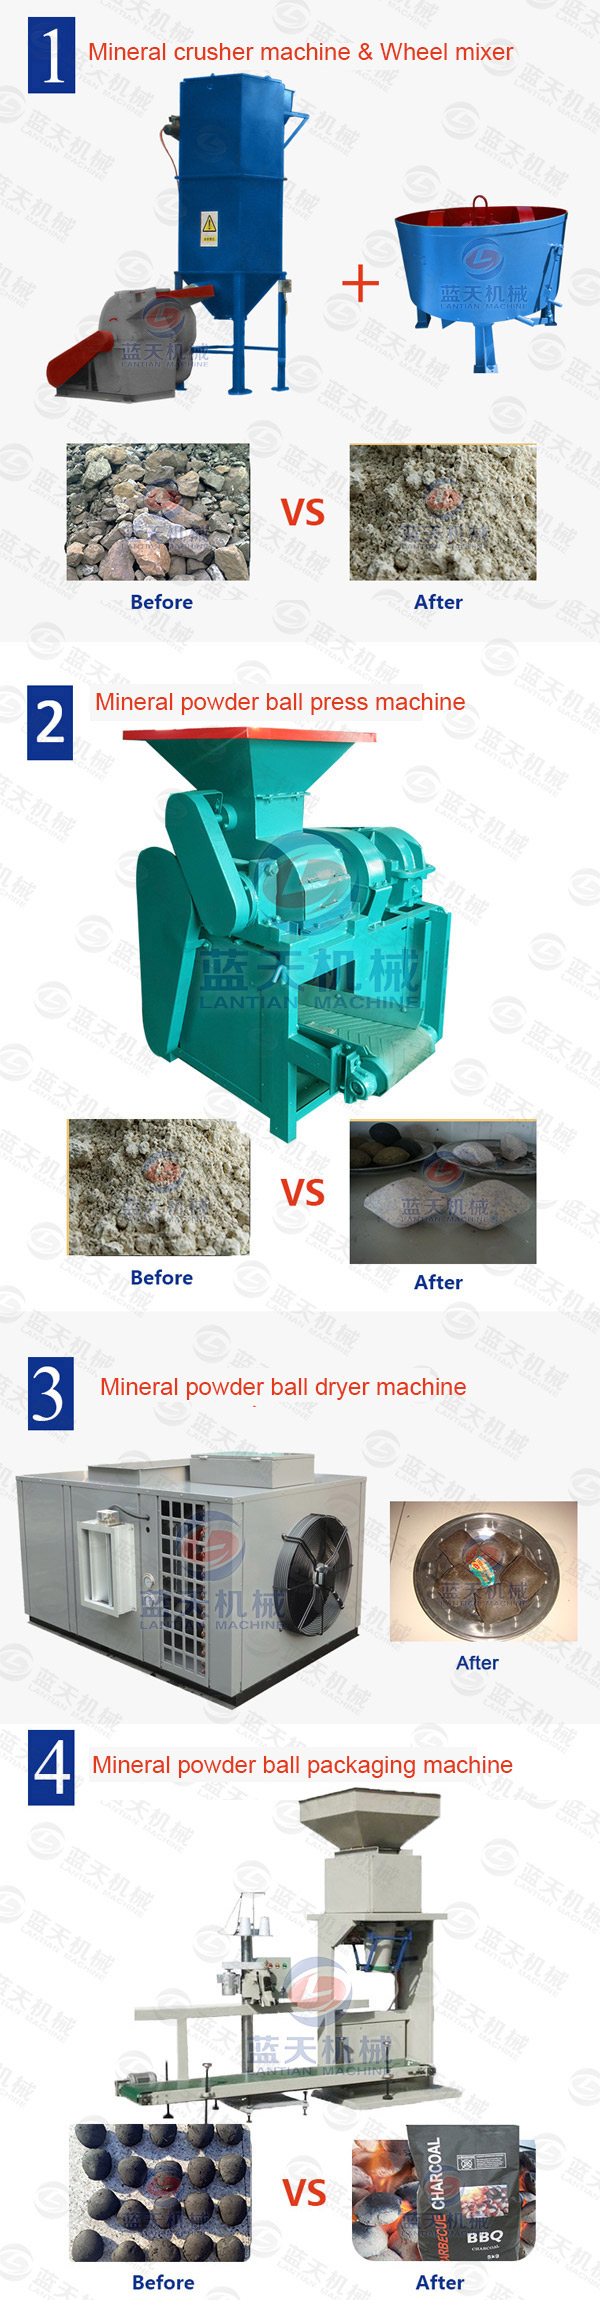 Mineral Powder Ball Press Machine